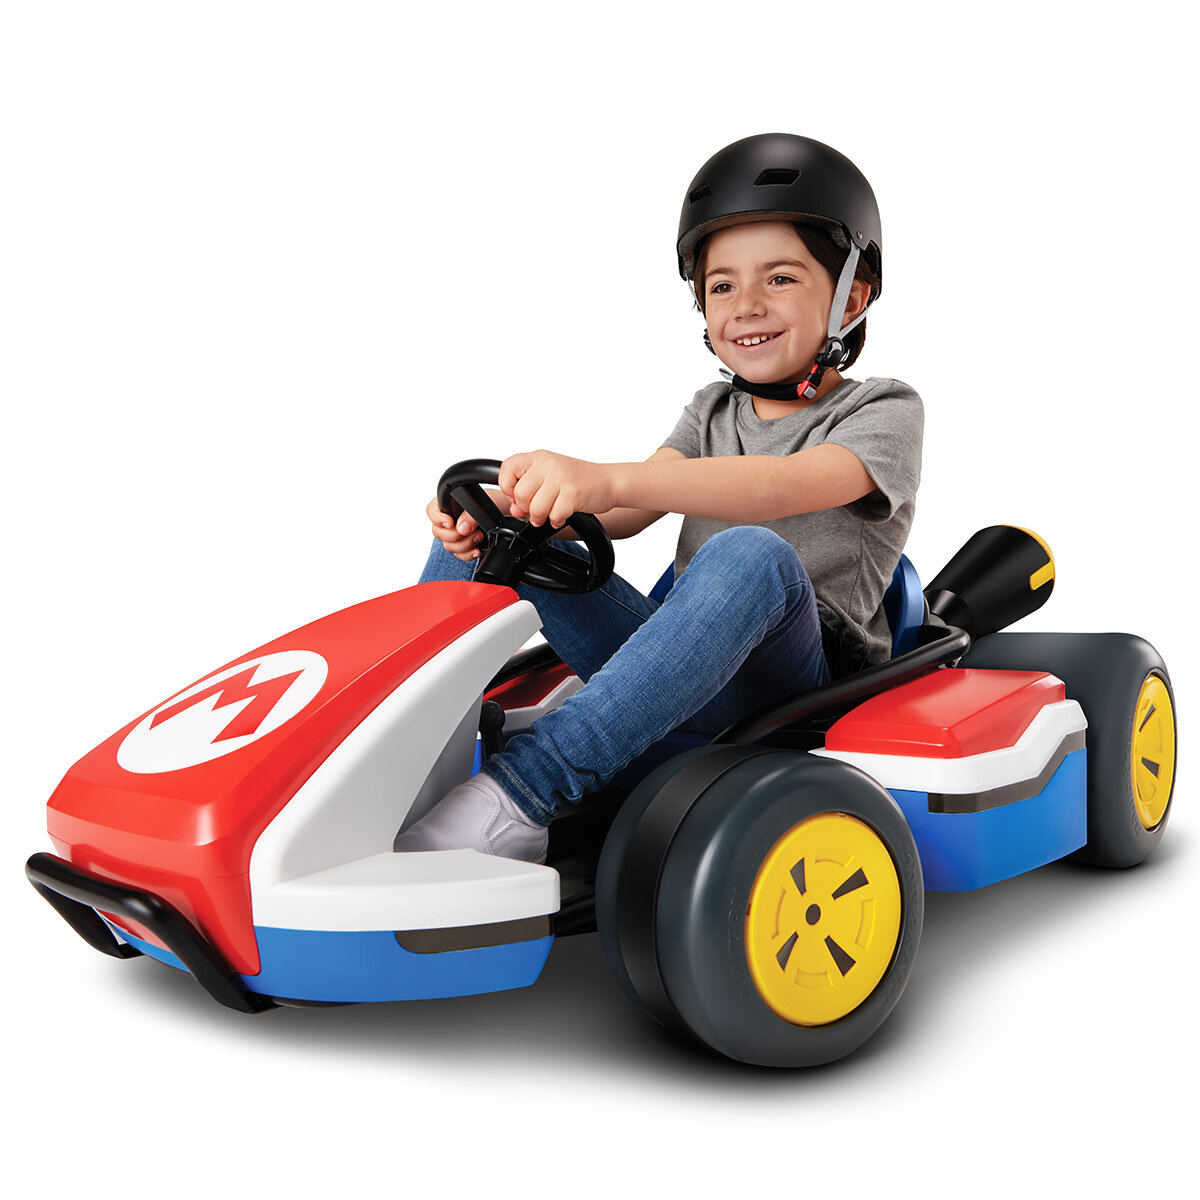 Mariokart Karting de Mario Télécommandé Voiture Jouets Toy Review Carrera  RC Nintendo 